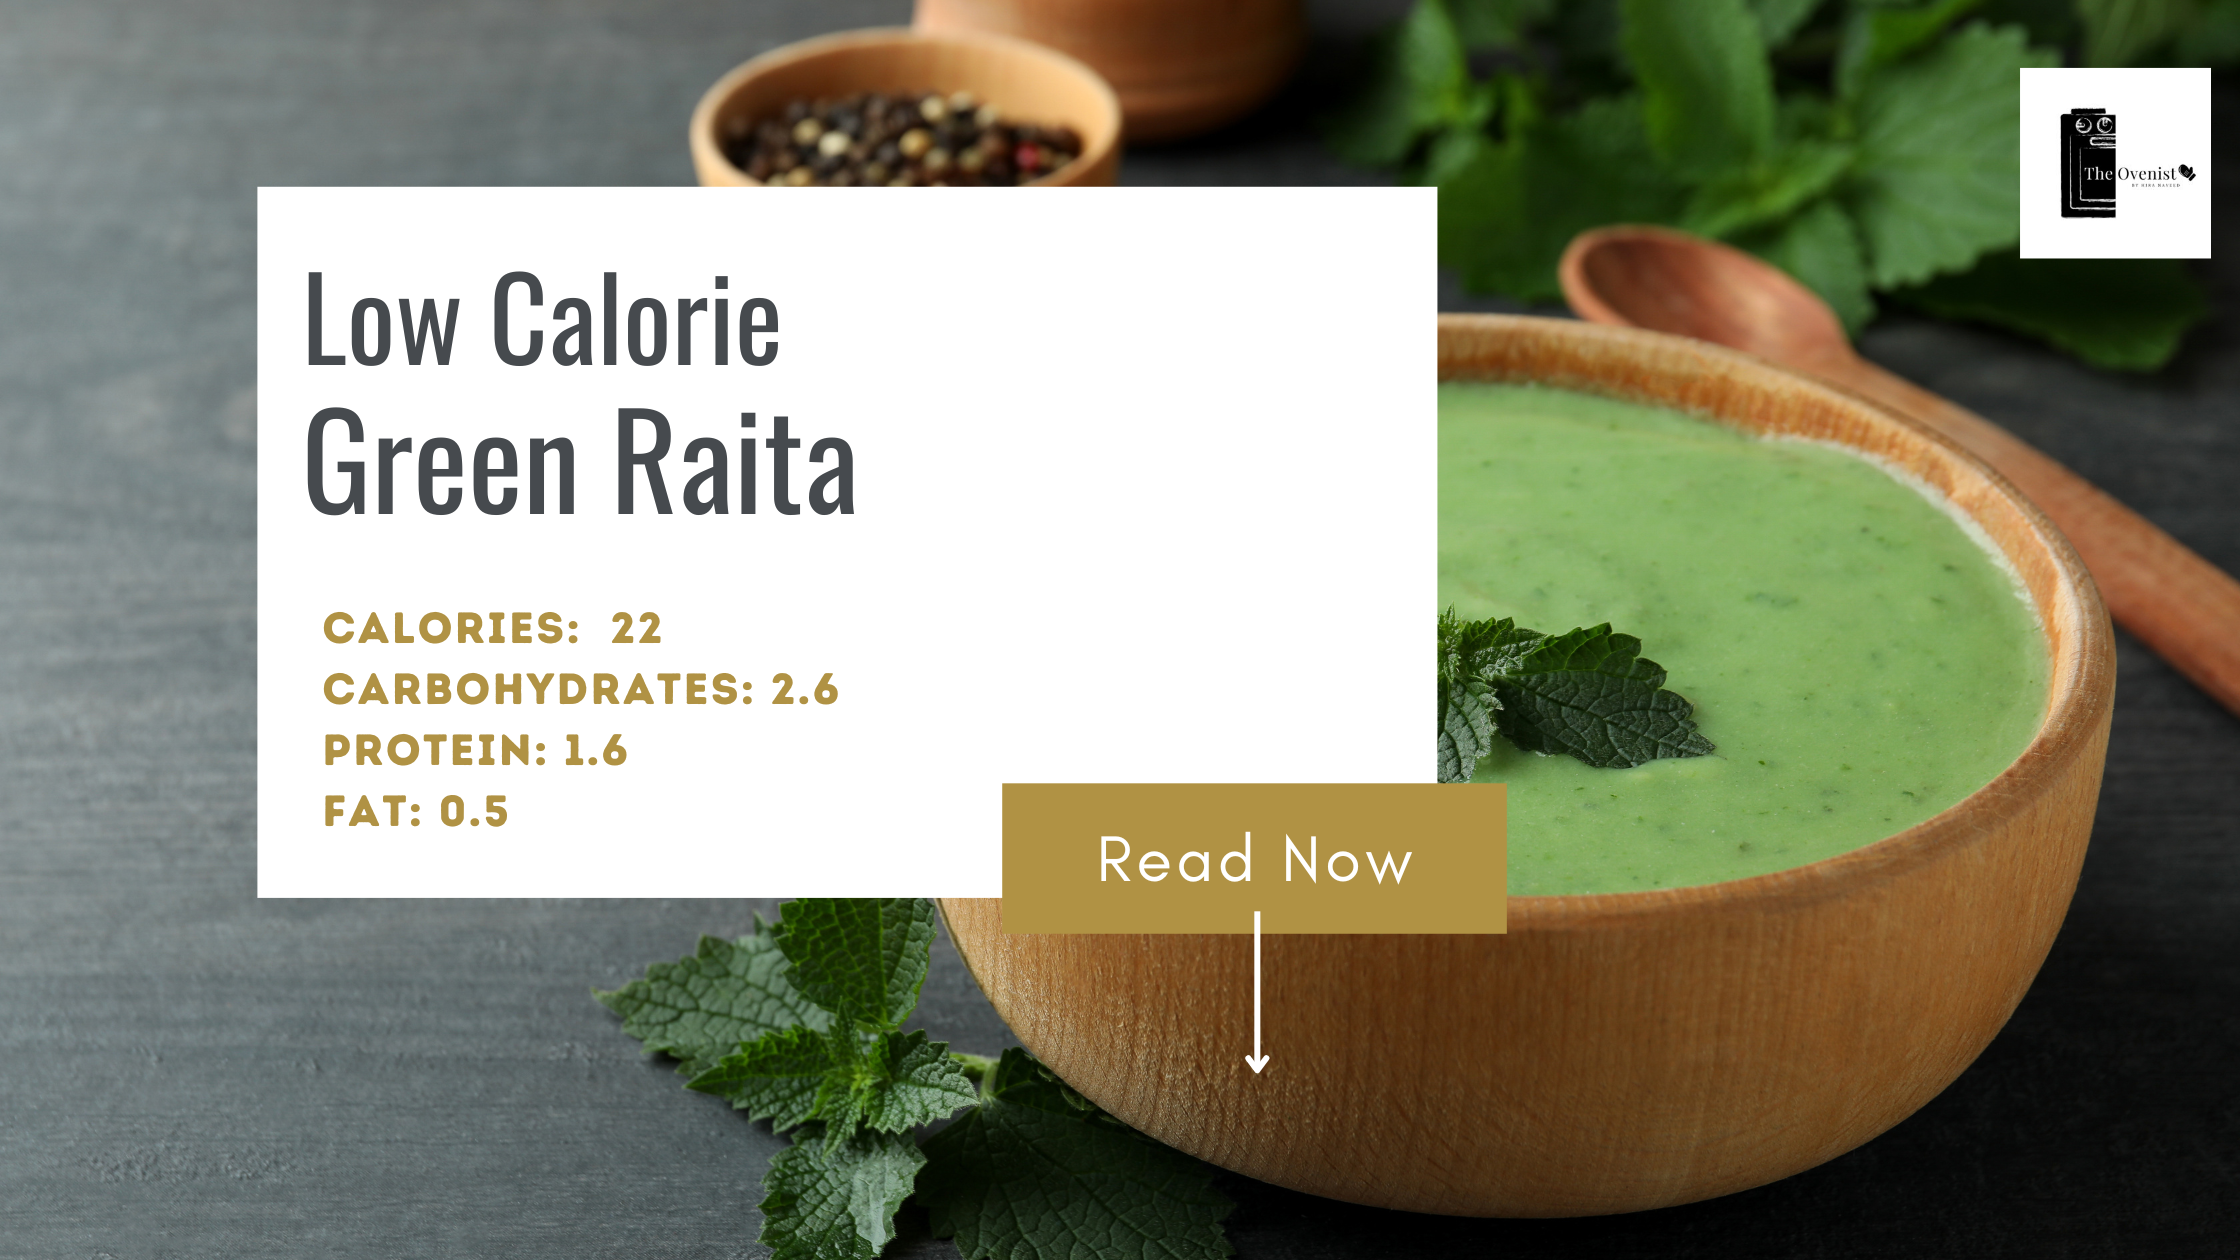 Low Calorie Green Raita